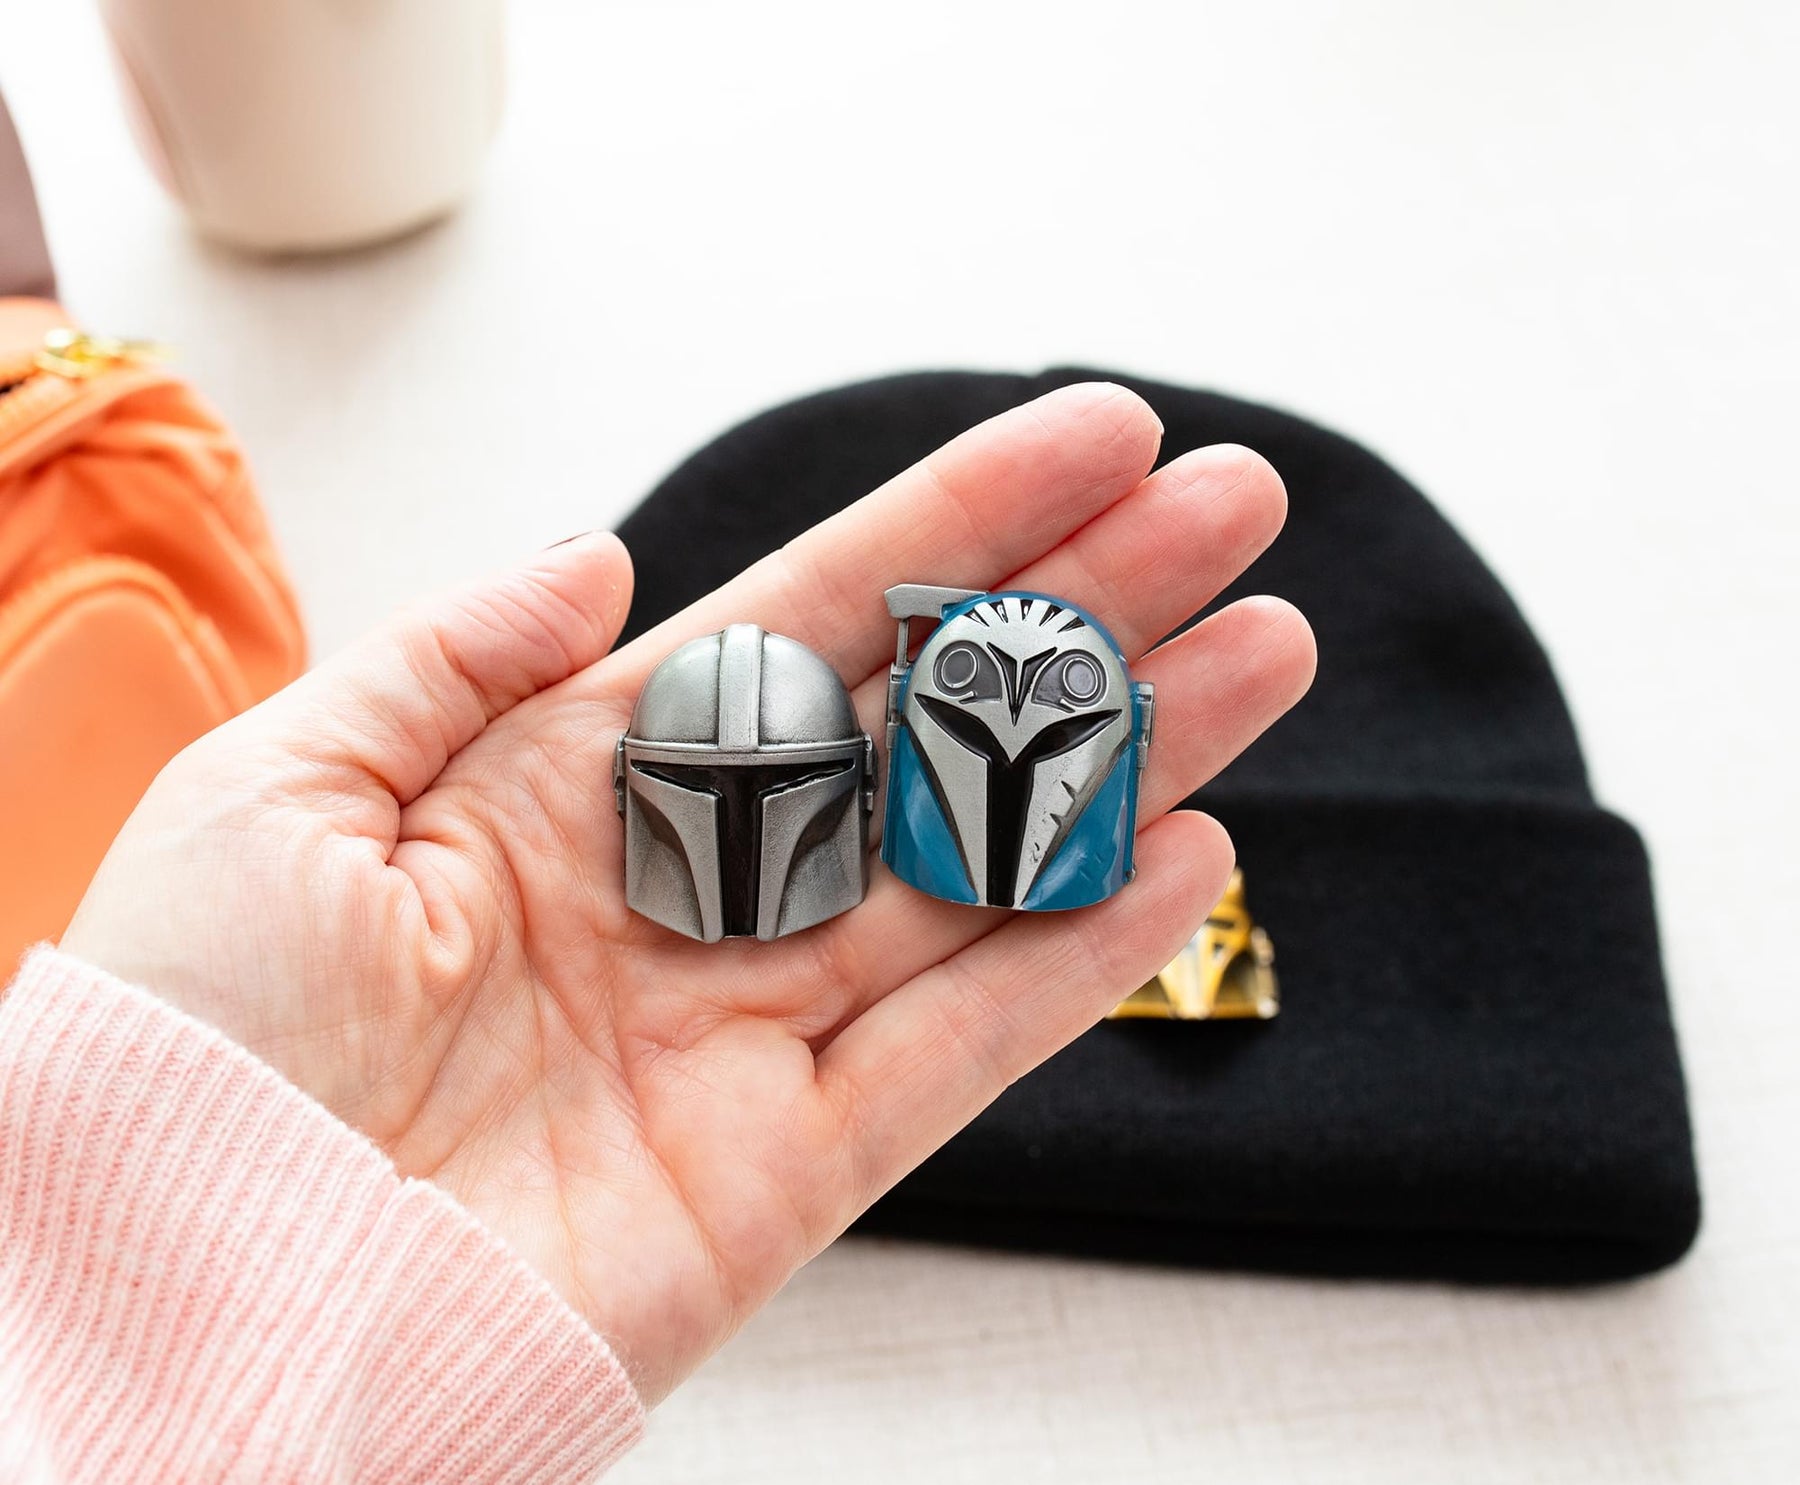 Star Wars: The Mandalorian 4-Piece 3D Metal Helmet Pin Set | Toynk Exclusive